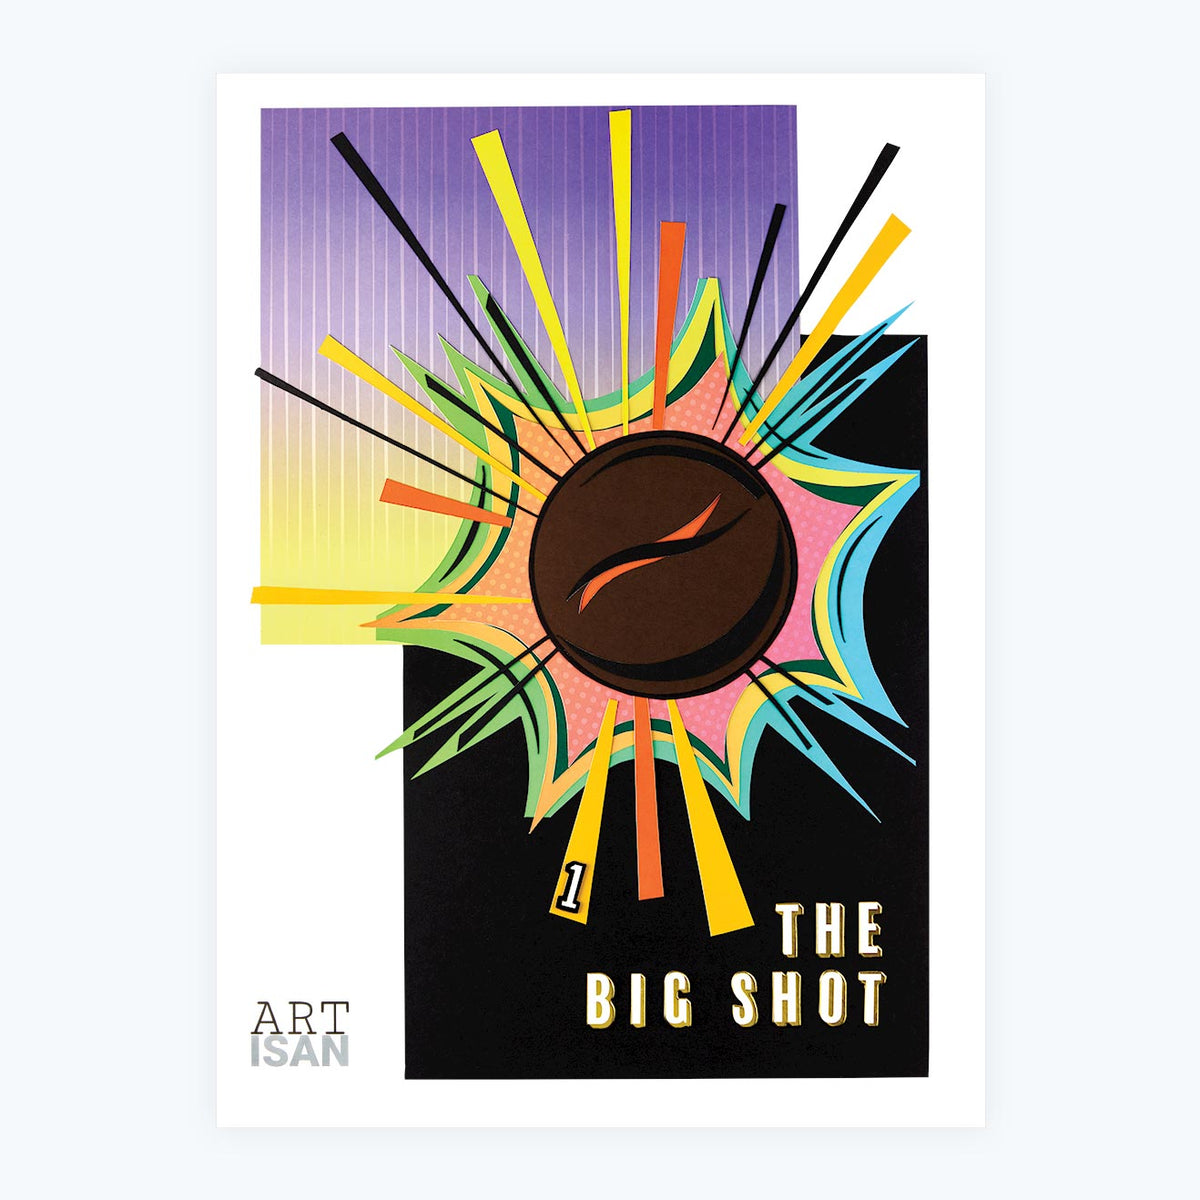 Autistic Ian x The Big Shot Limited Edition Print